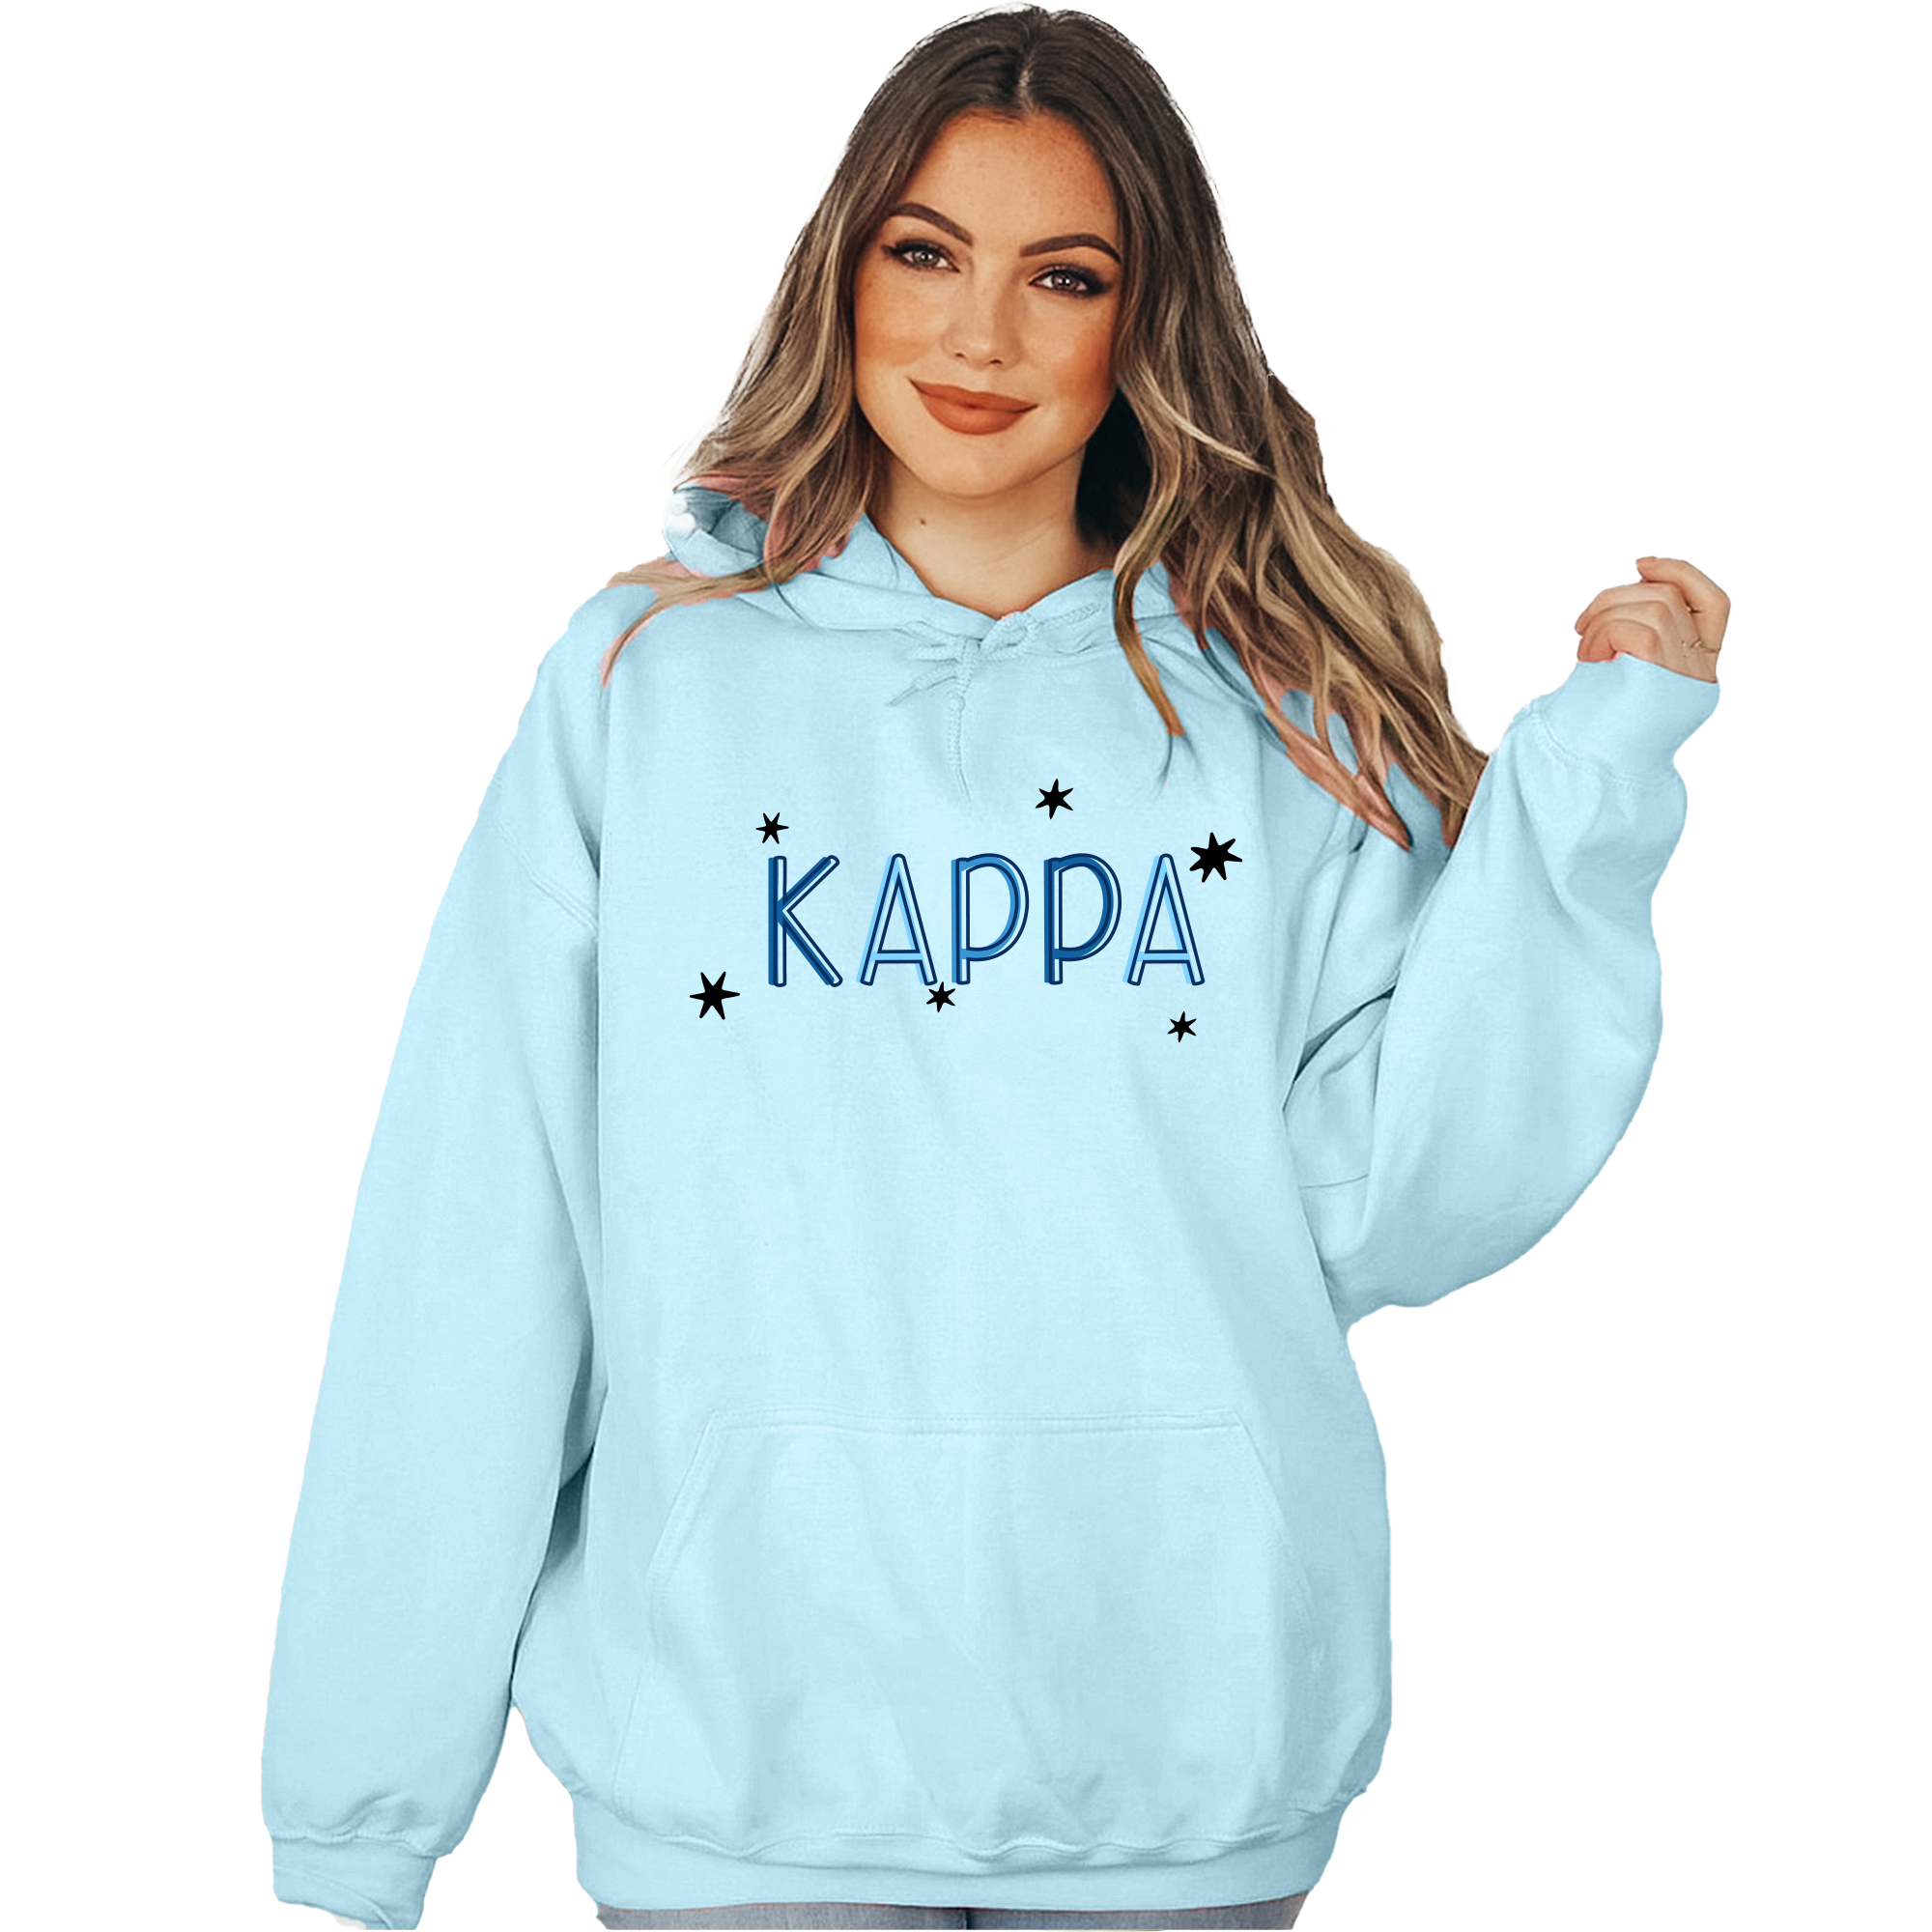 Kappa Kappa Gamma Hoodie - Kappa, Sparkle, Blue Hoodie, Greek Apparel, Big Little Reveal, Initiation - Go Greek Chic